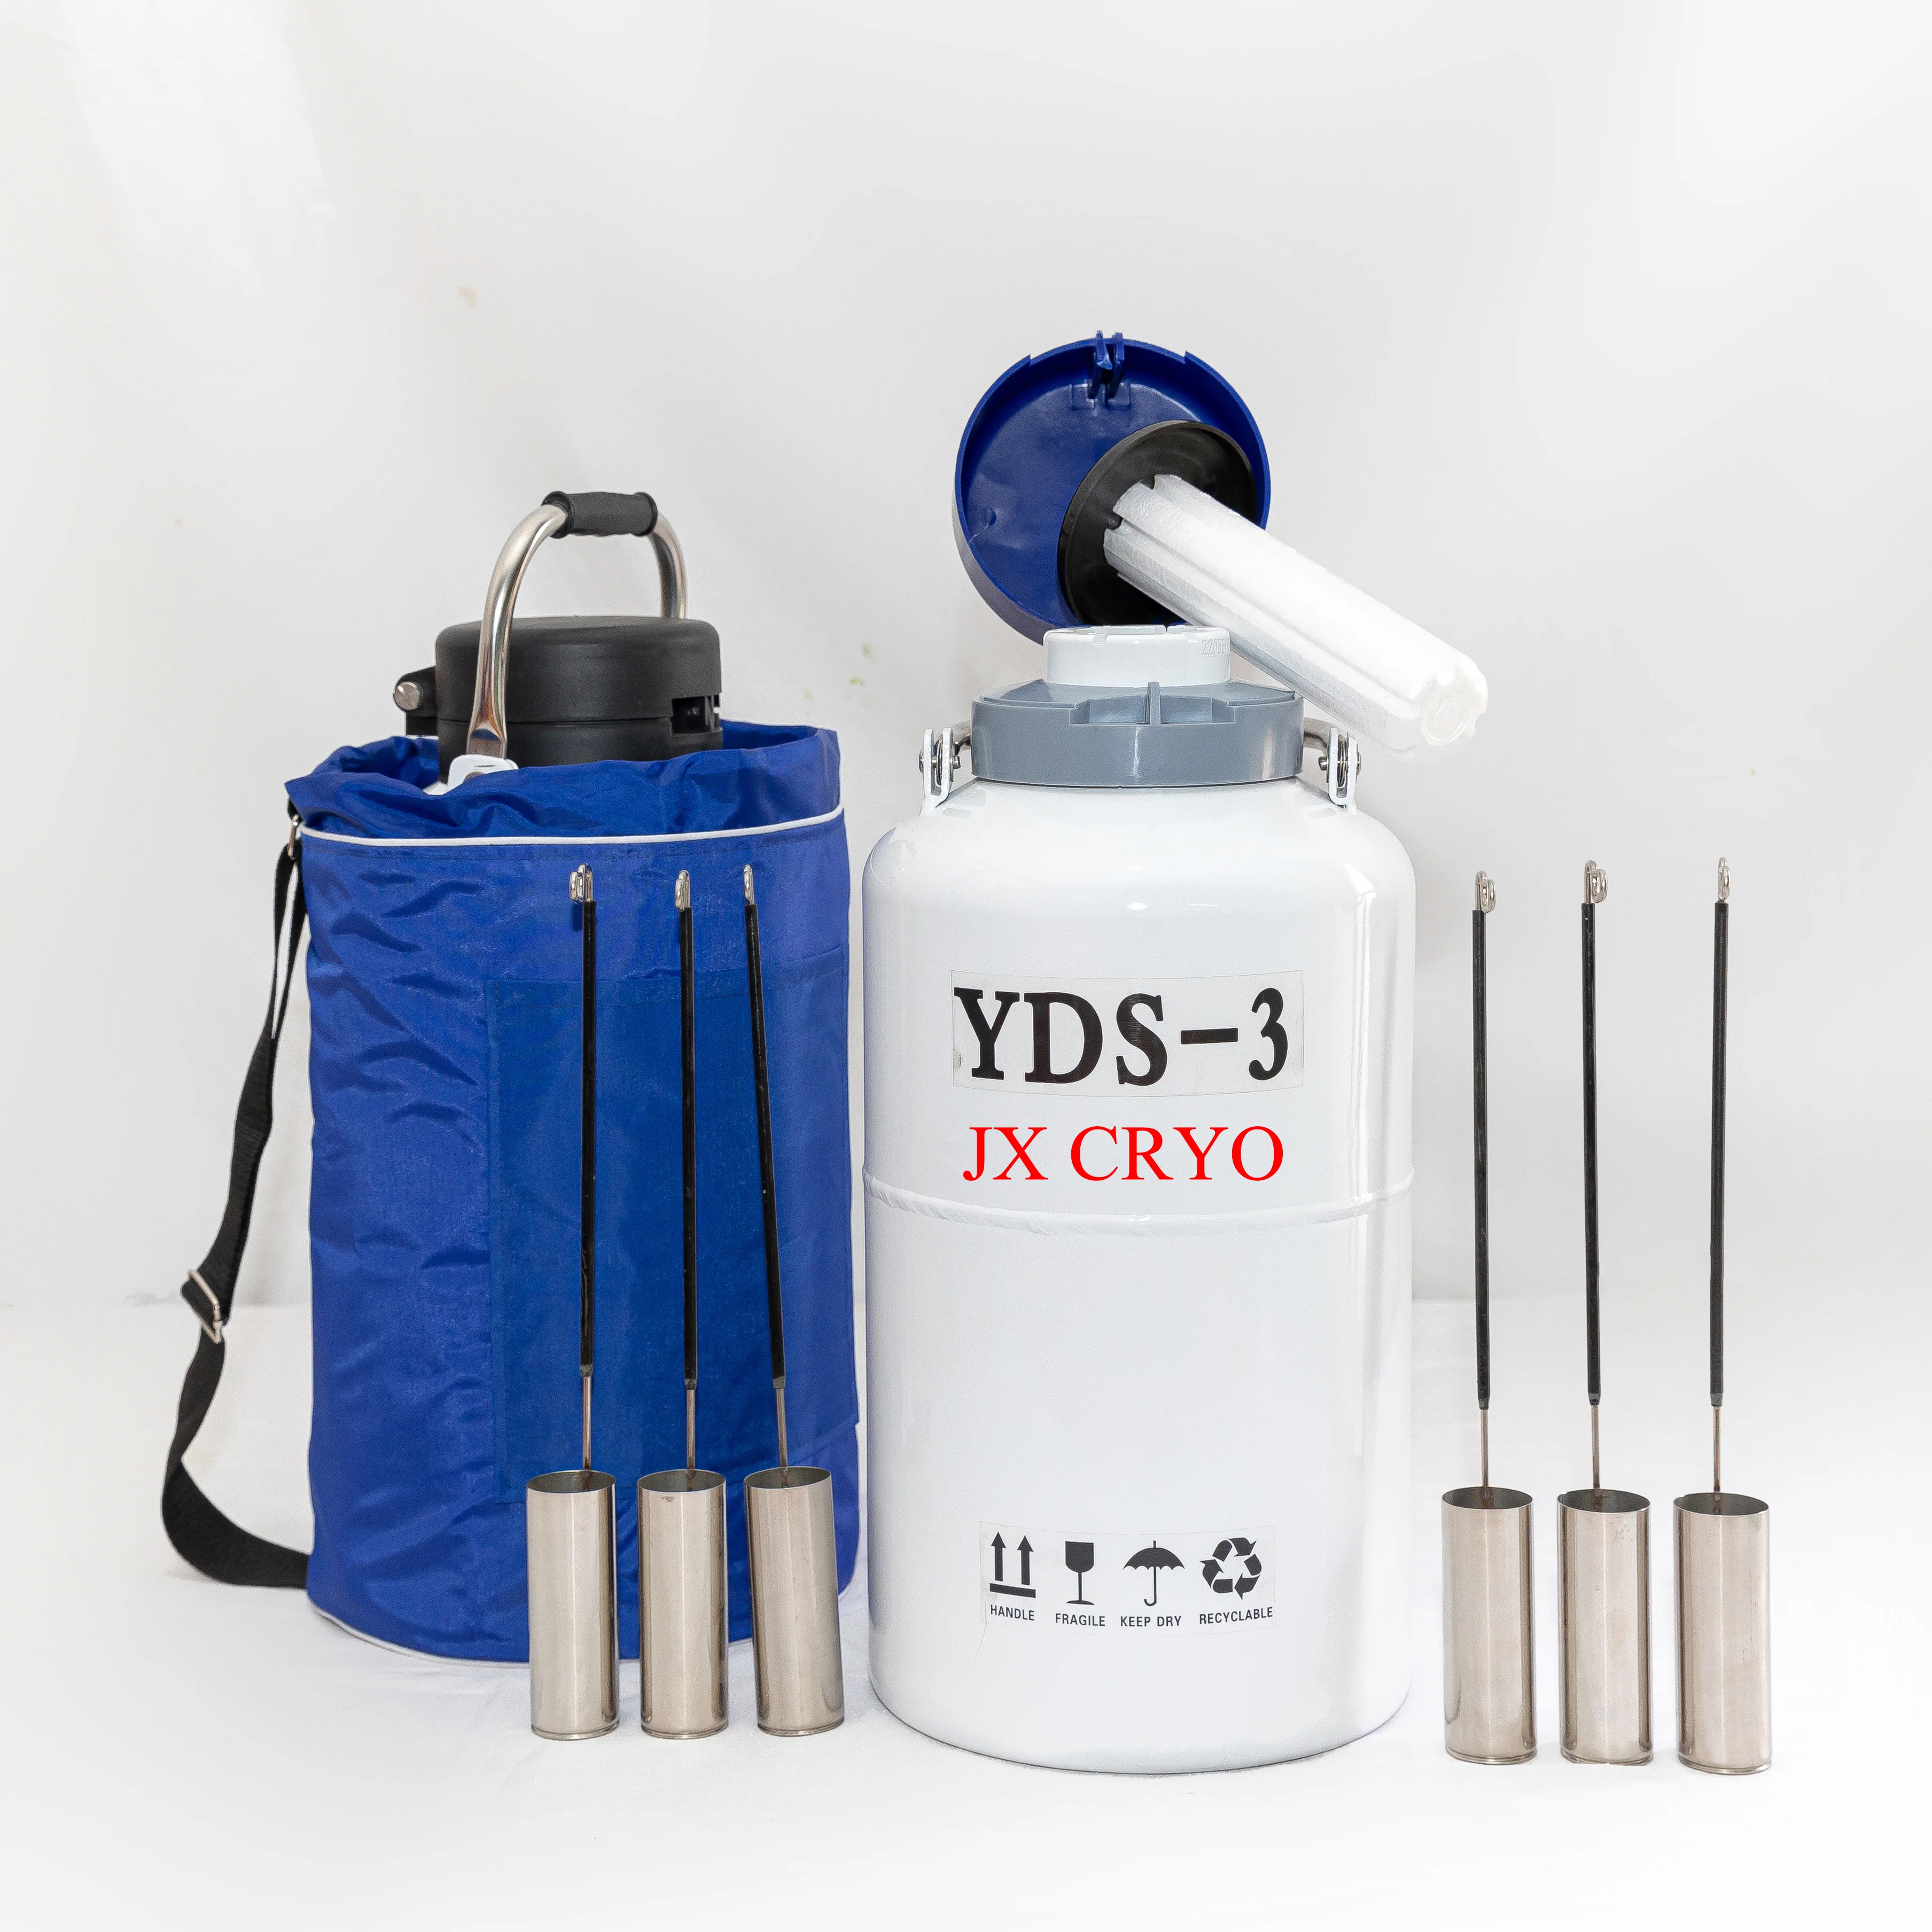 YDS-3 artificial insemination liquid nitrogen container veterinary cryogenic equipment